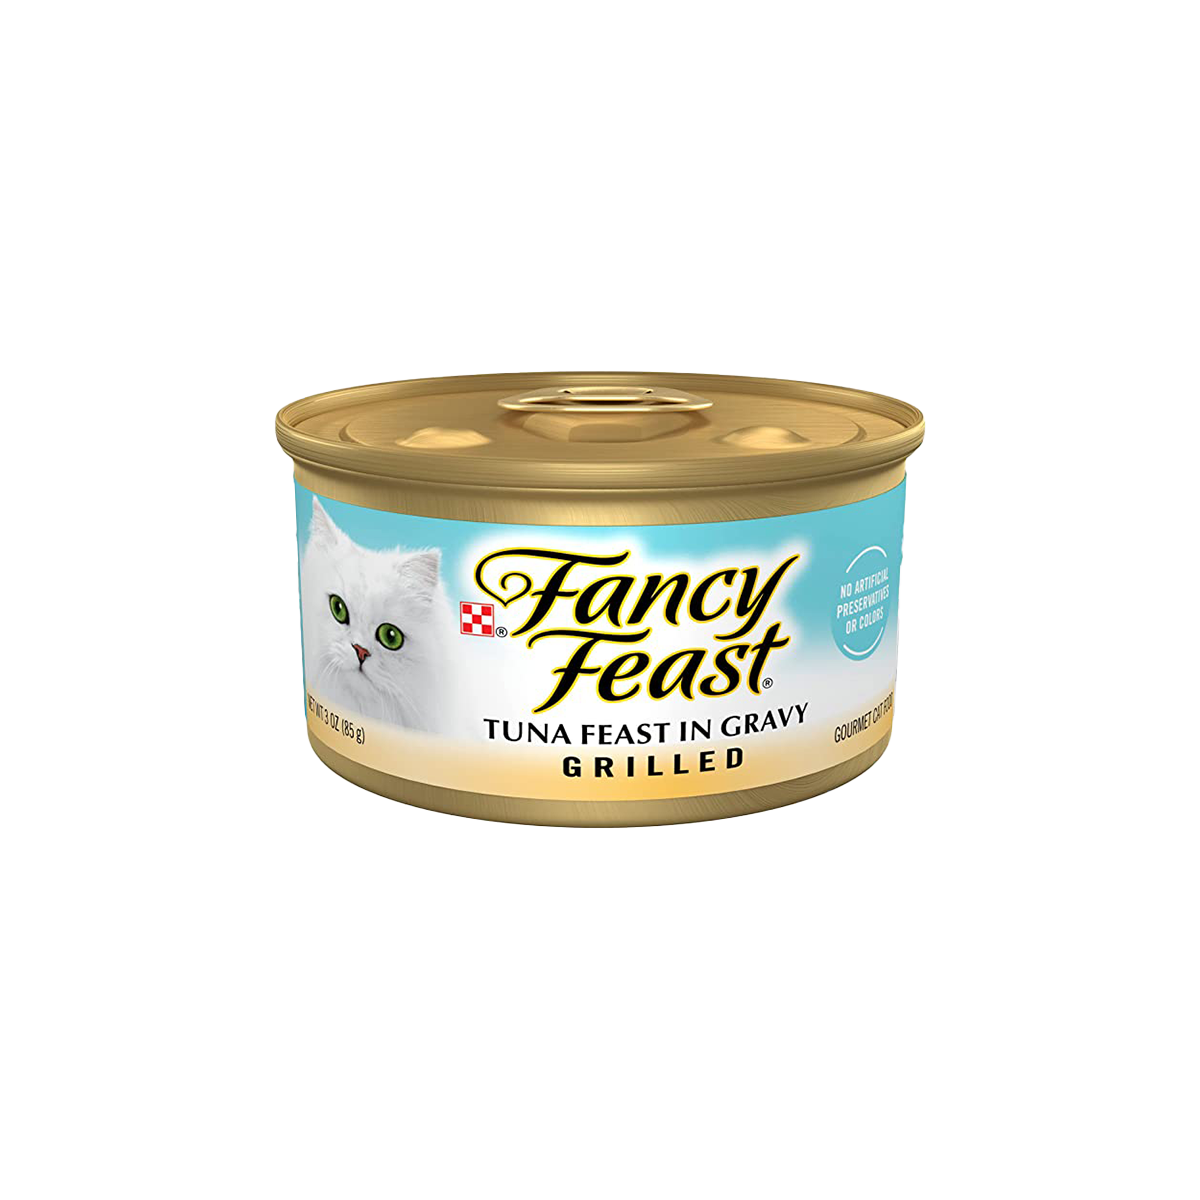 Purina-FancyFeast-tuna-feast-in-gravy.png